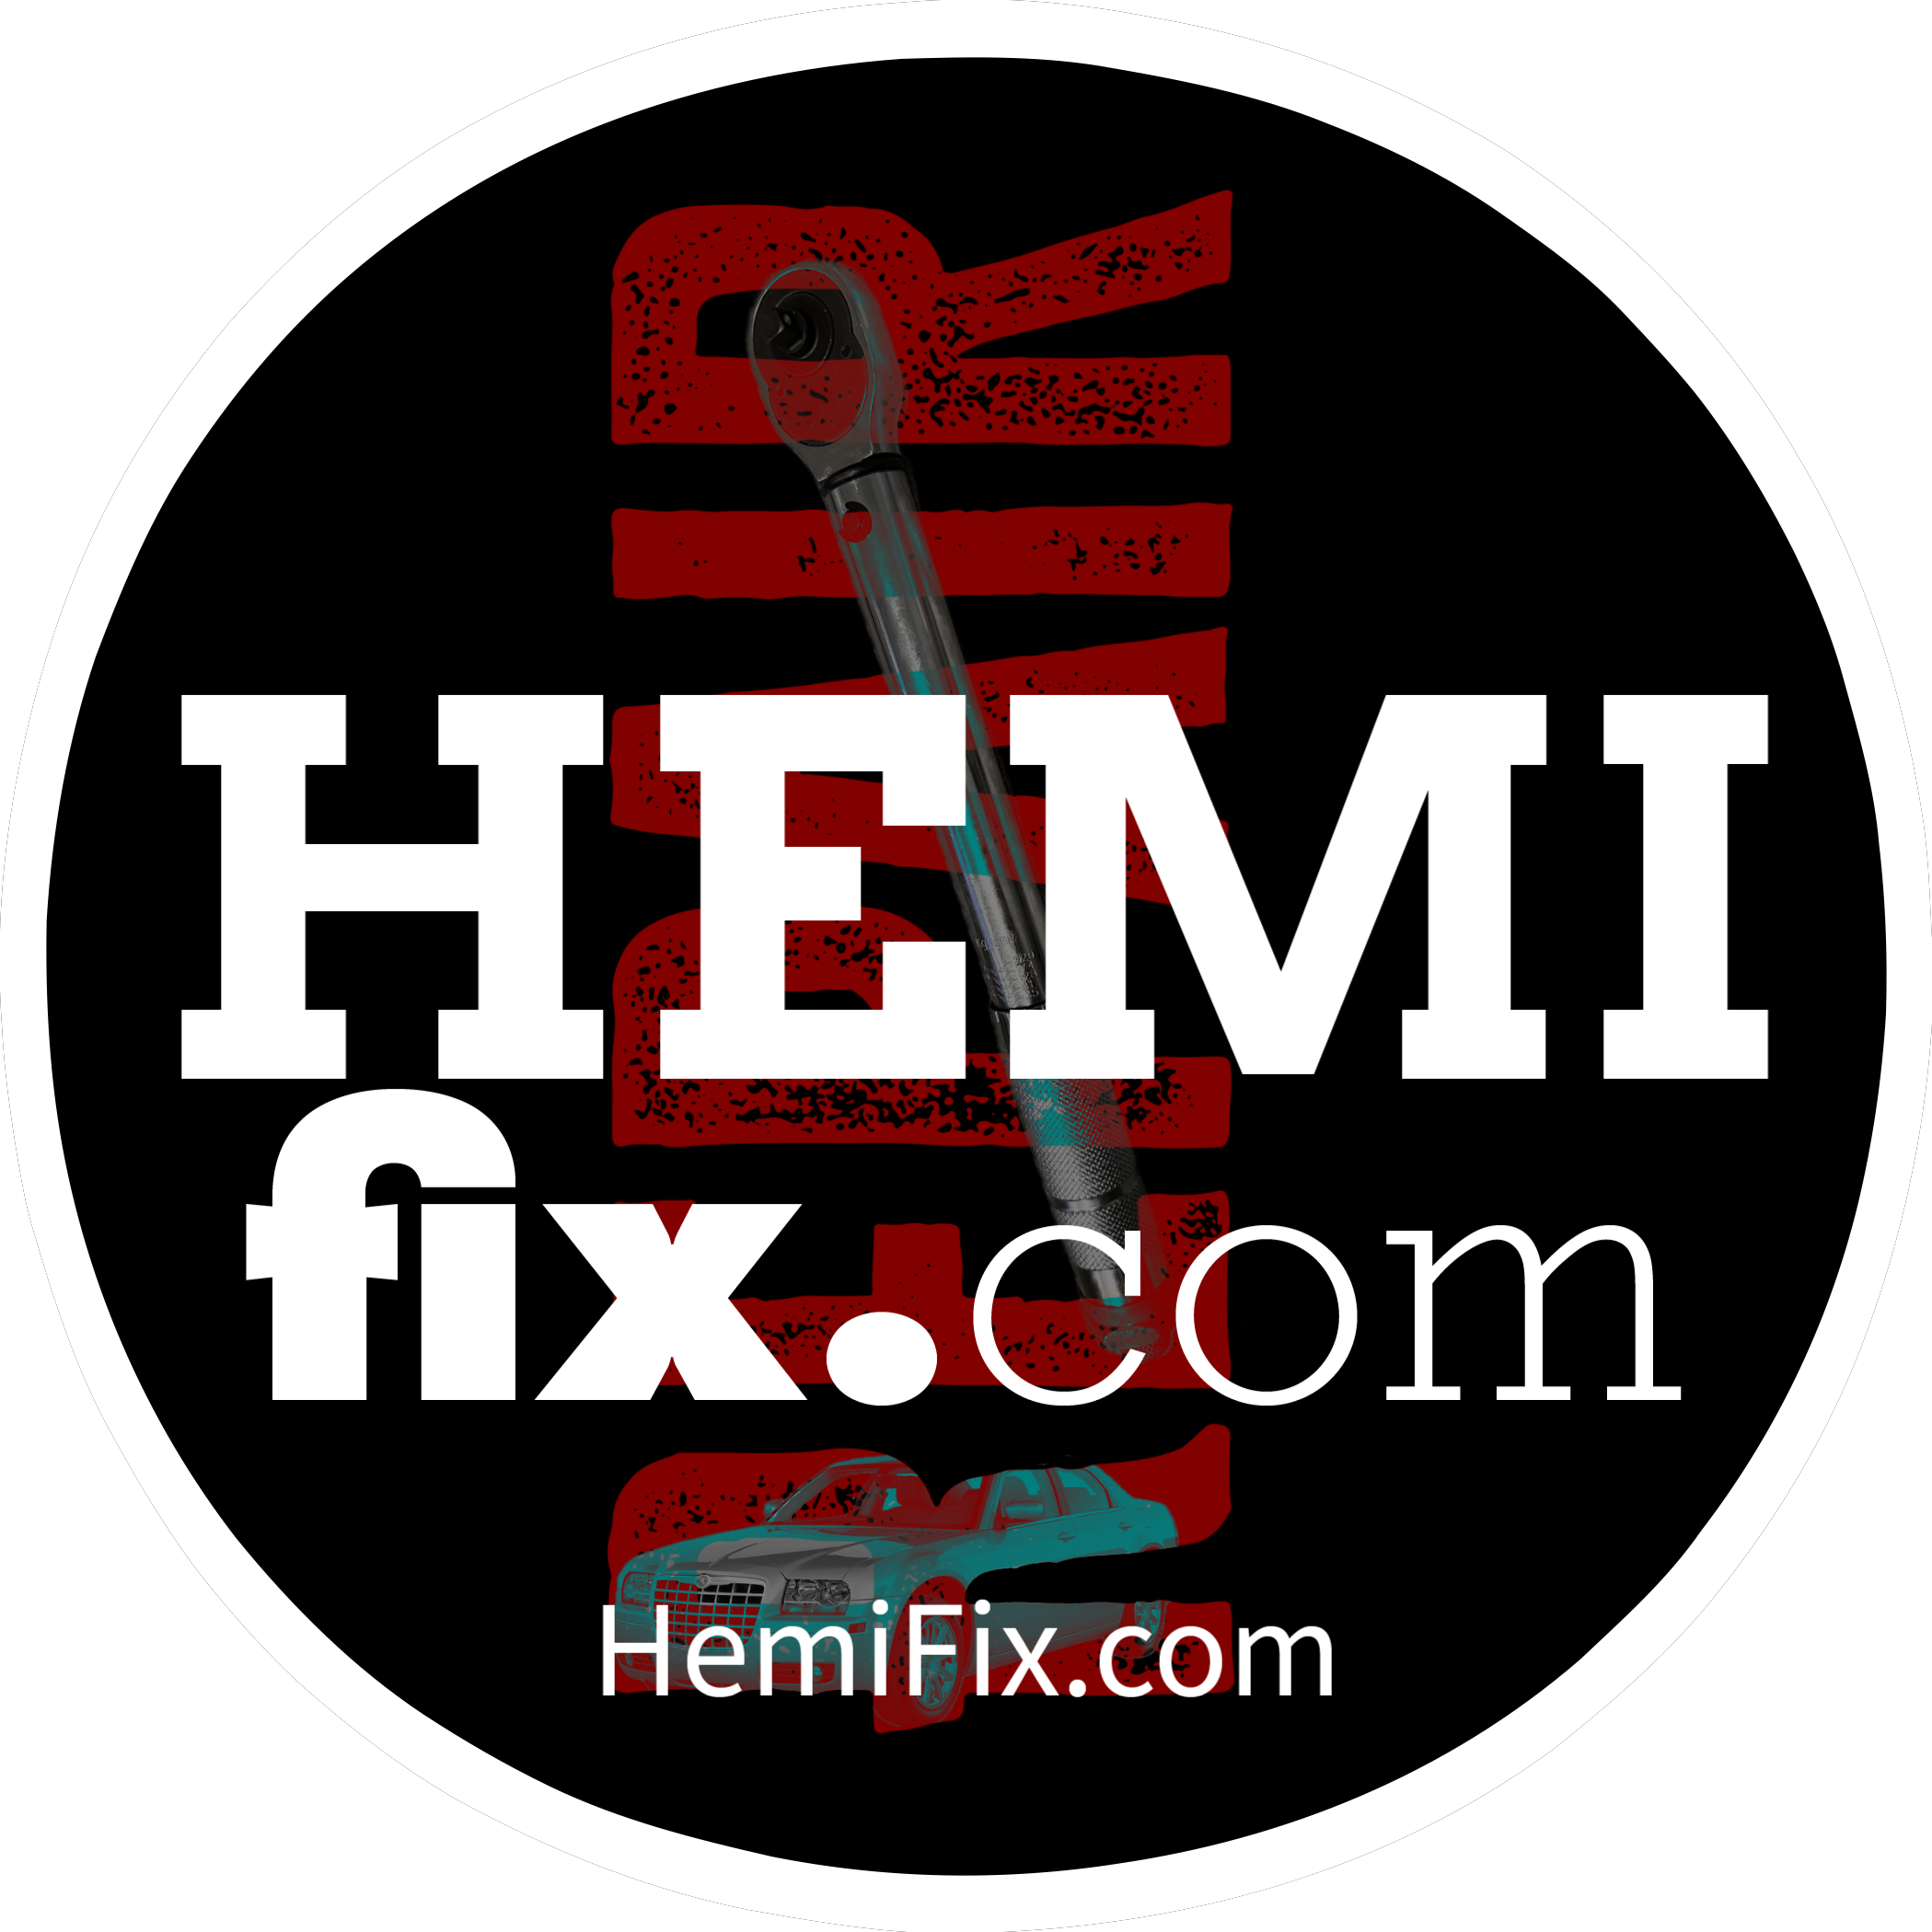 HemiFix.com